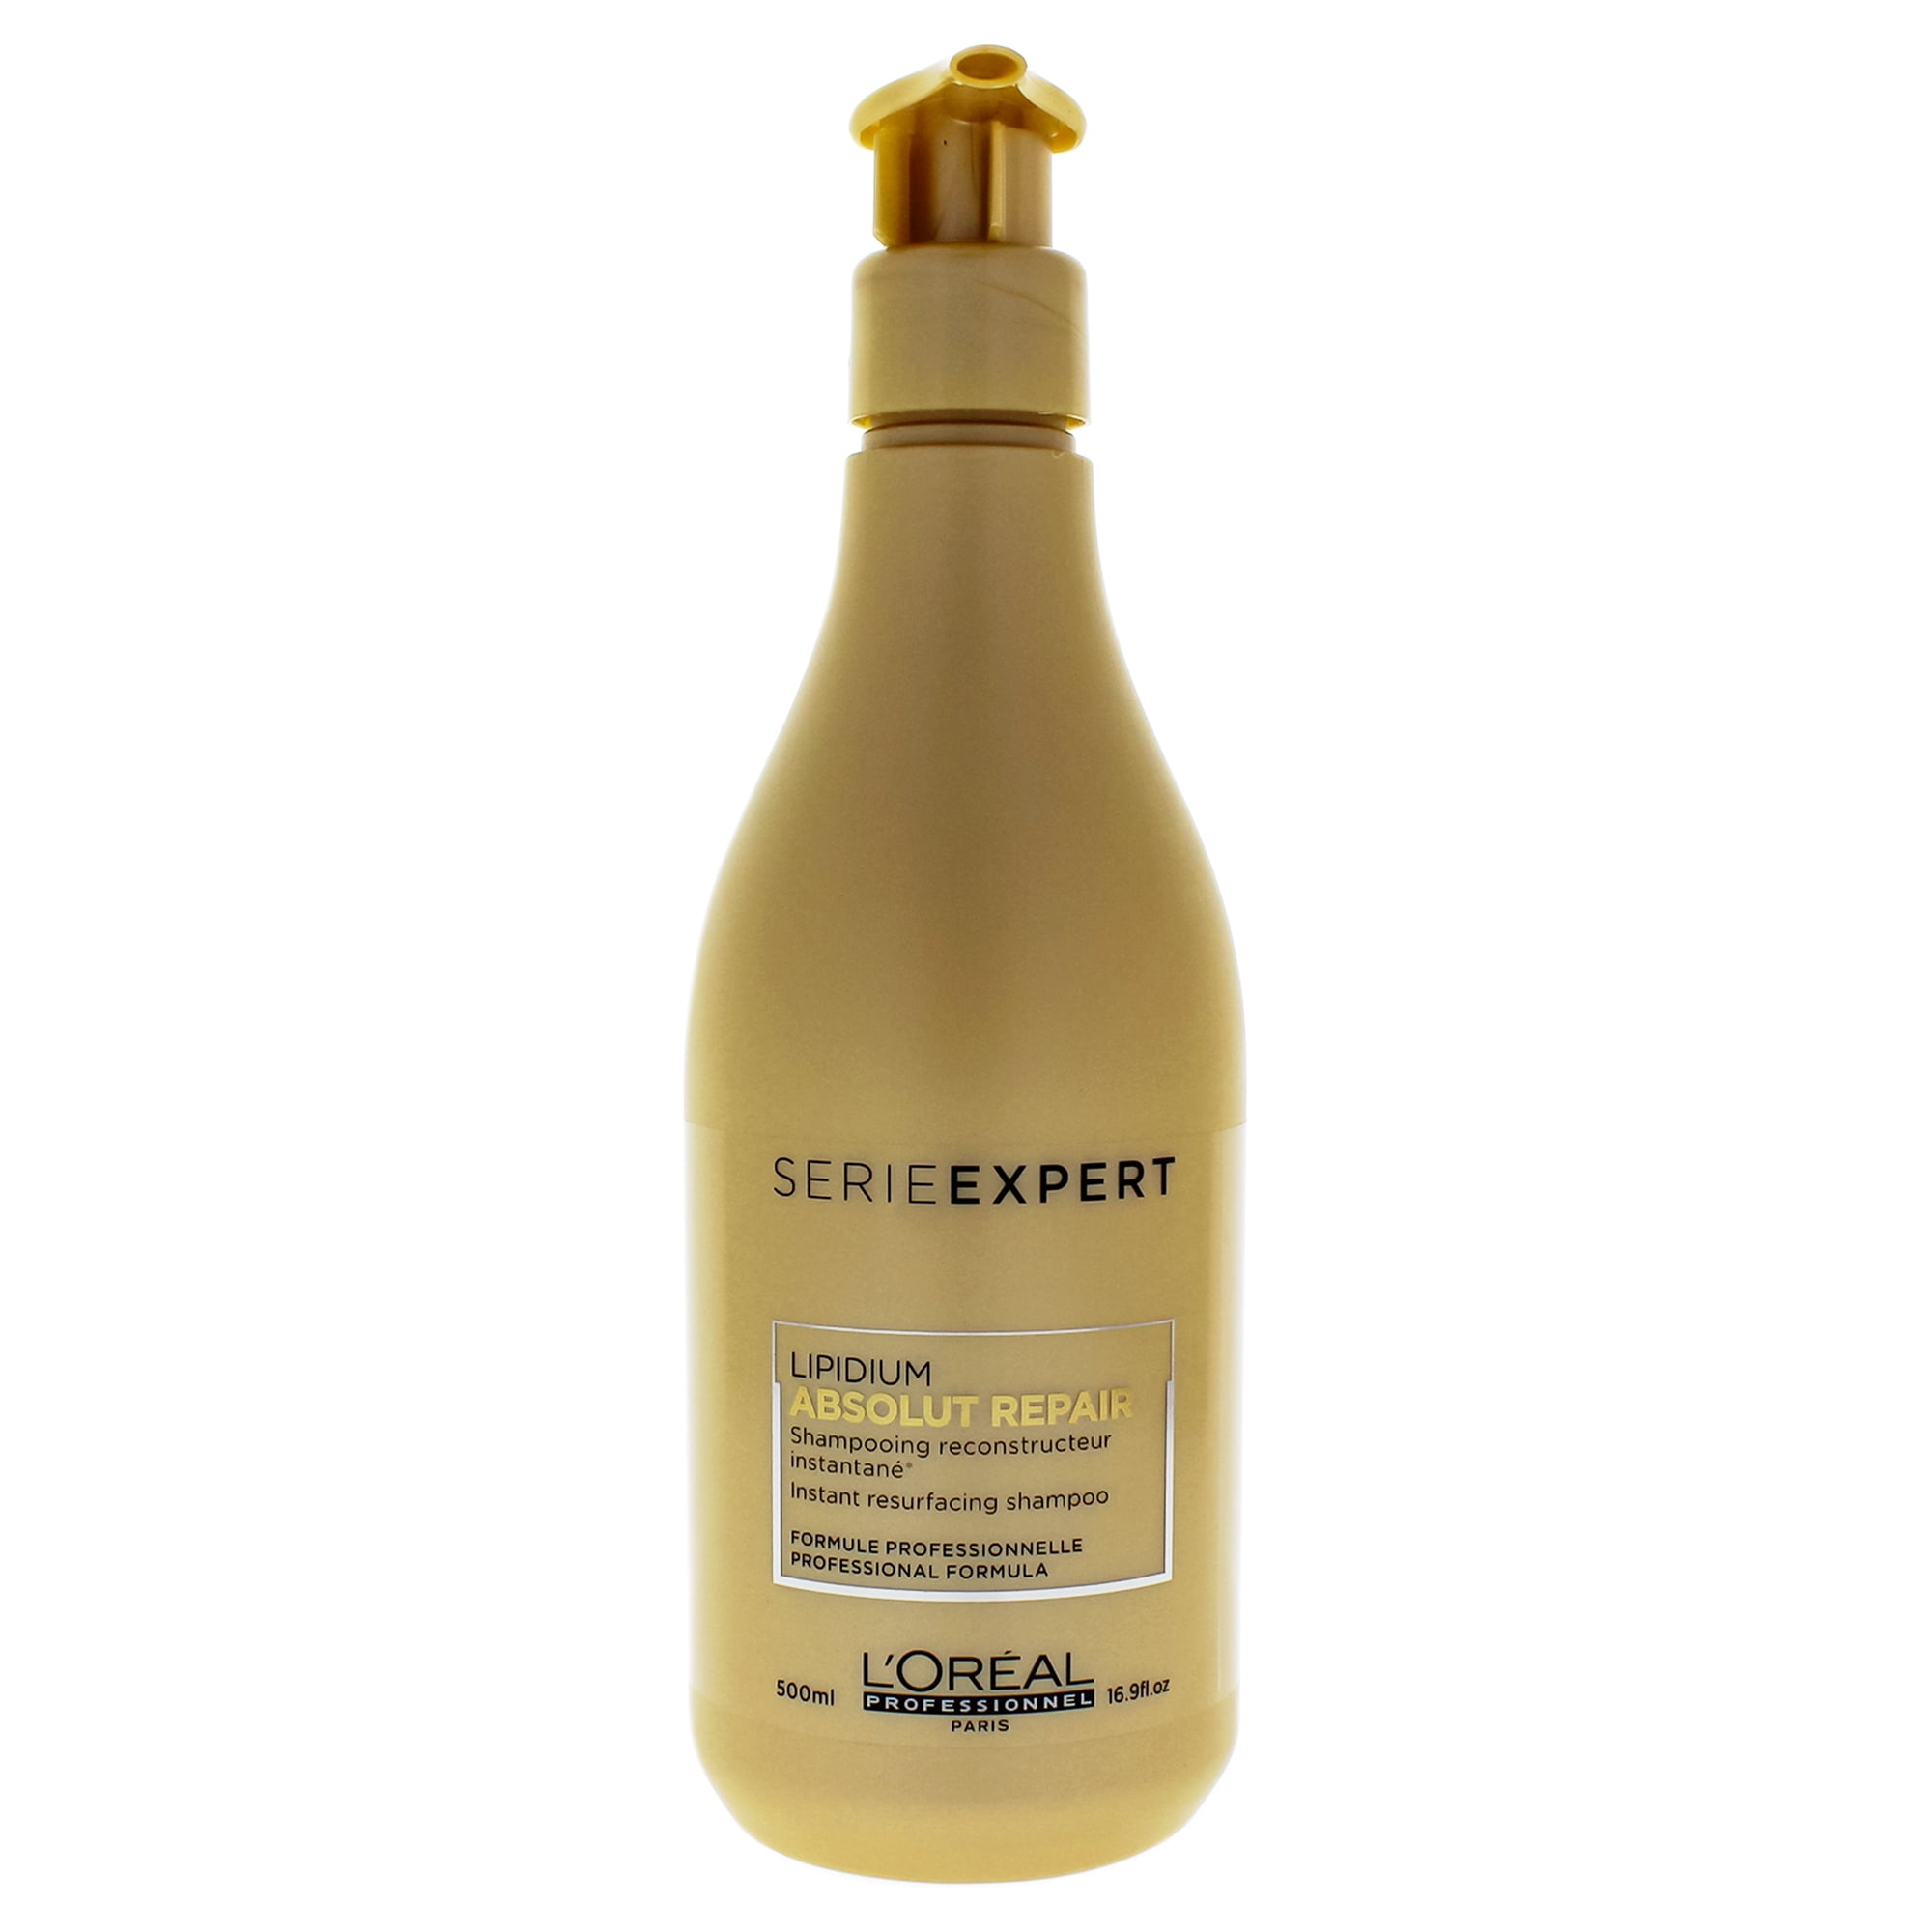 Serie Expert Absolut Repair Lipidium Shampoo by L'Oreal Professional for Unisex oz - Walmart.com